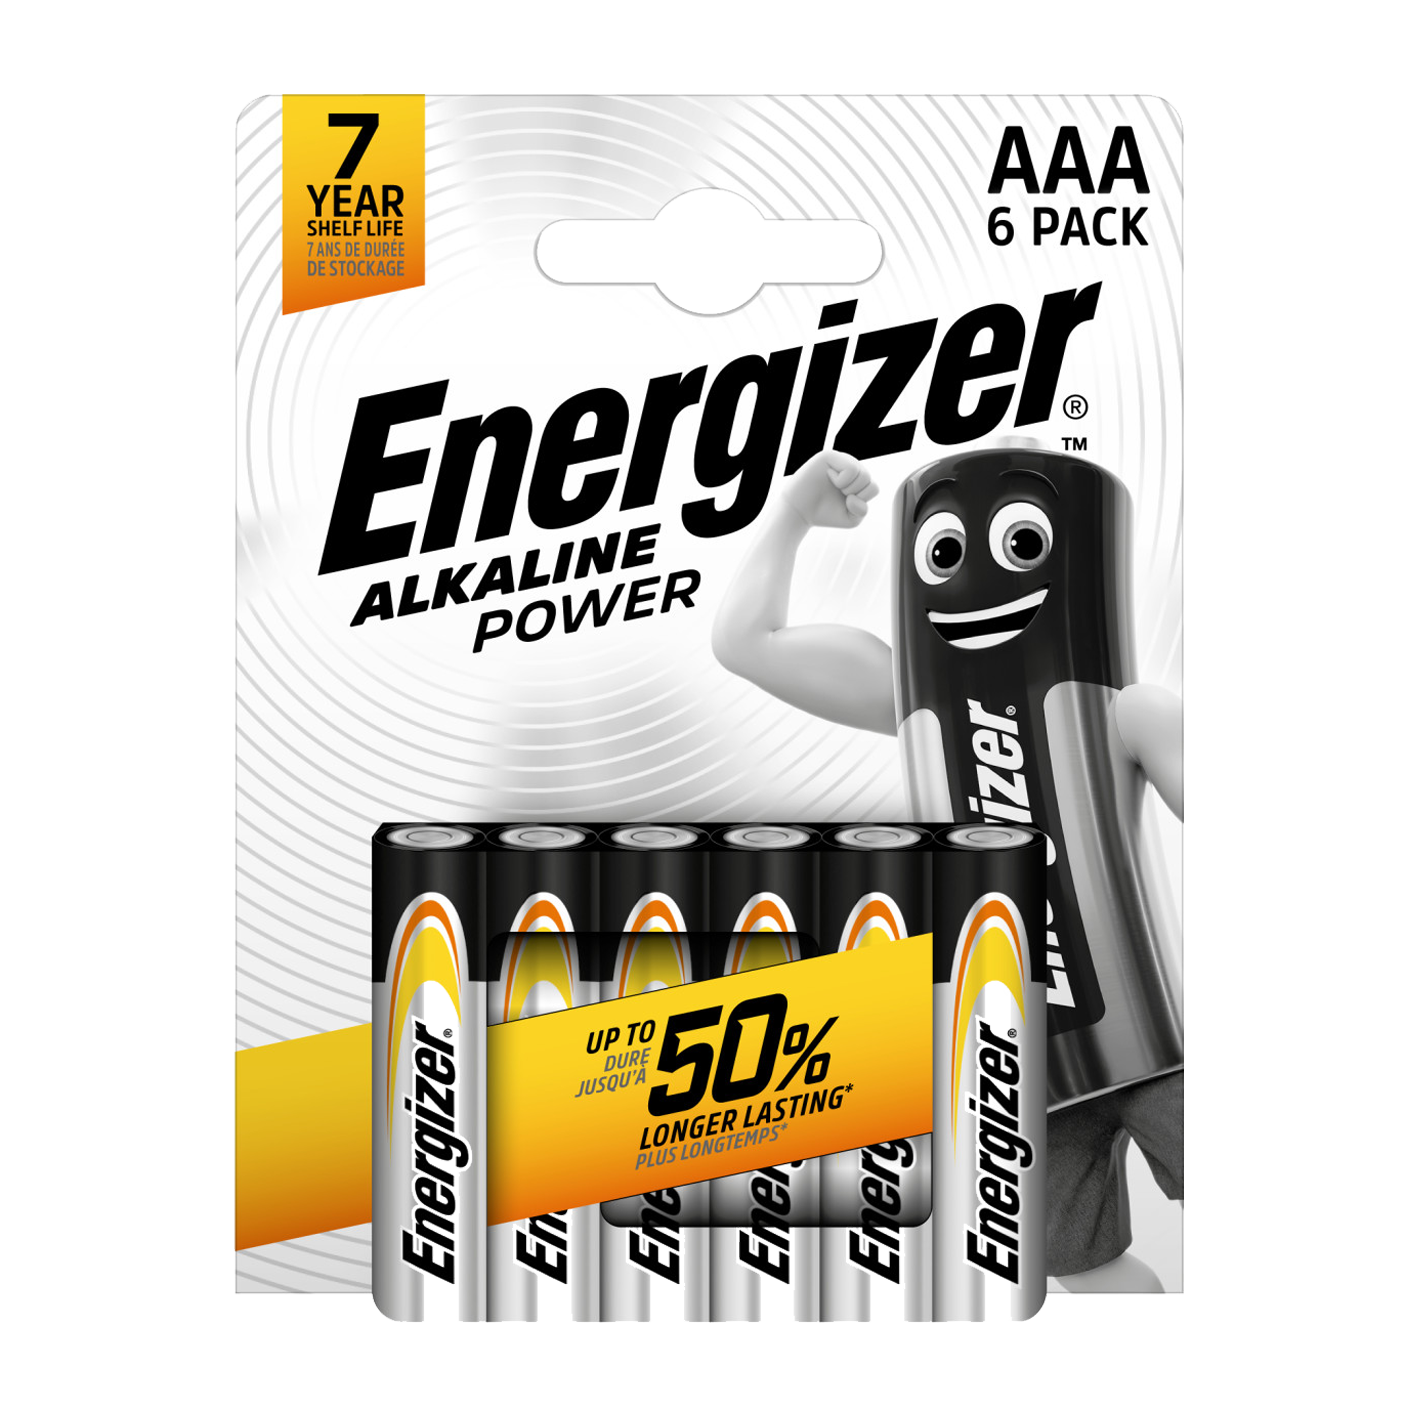 Energizer AAA energía alcalina, paquete de 4